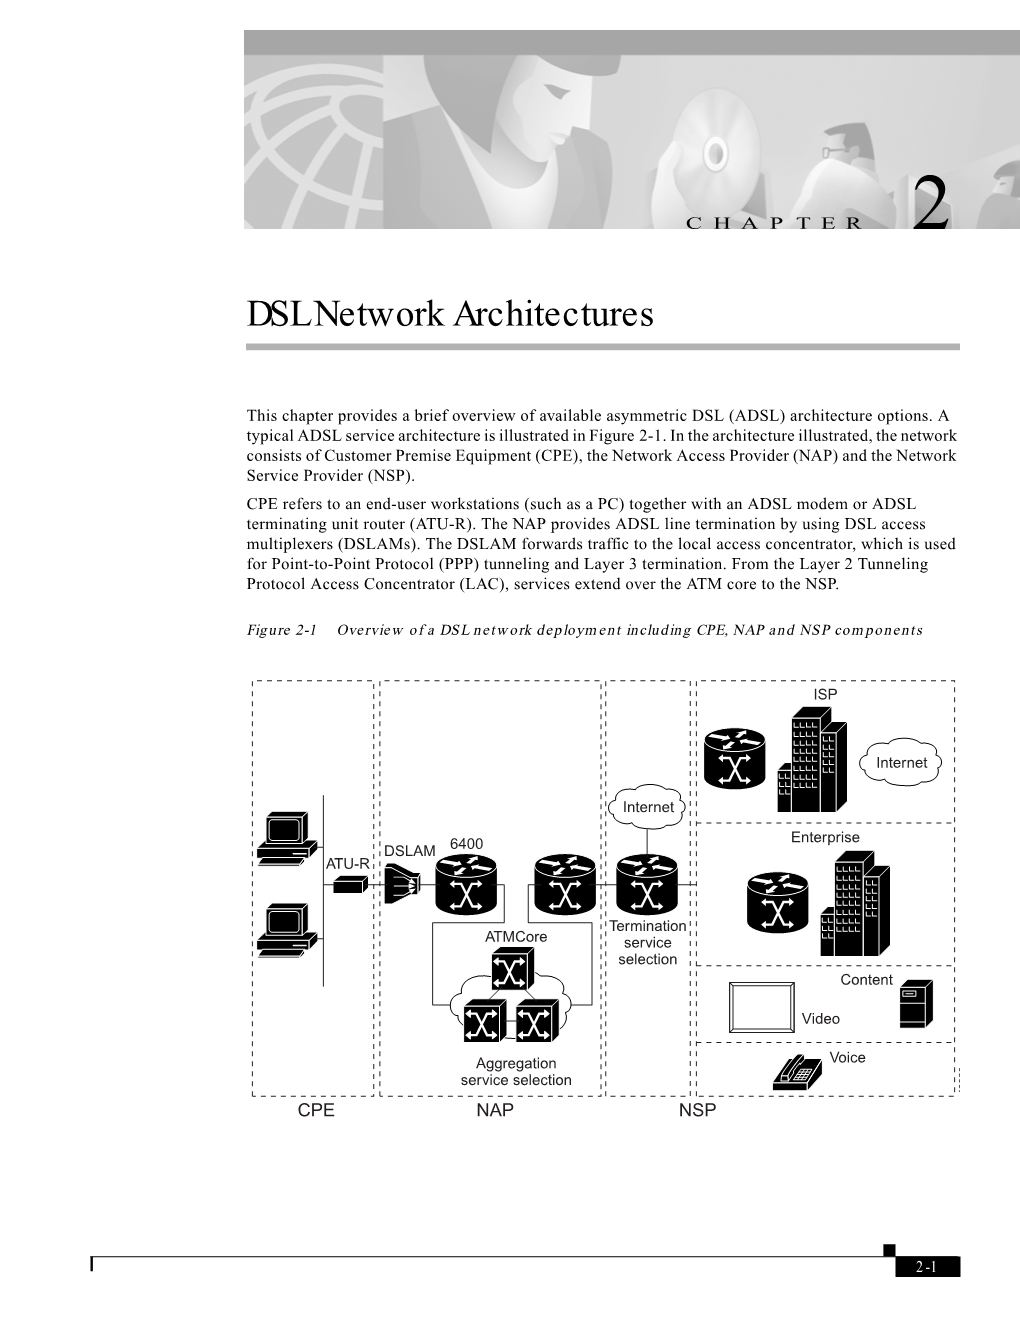 DSL Network Architectures